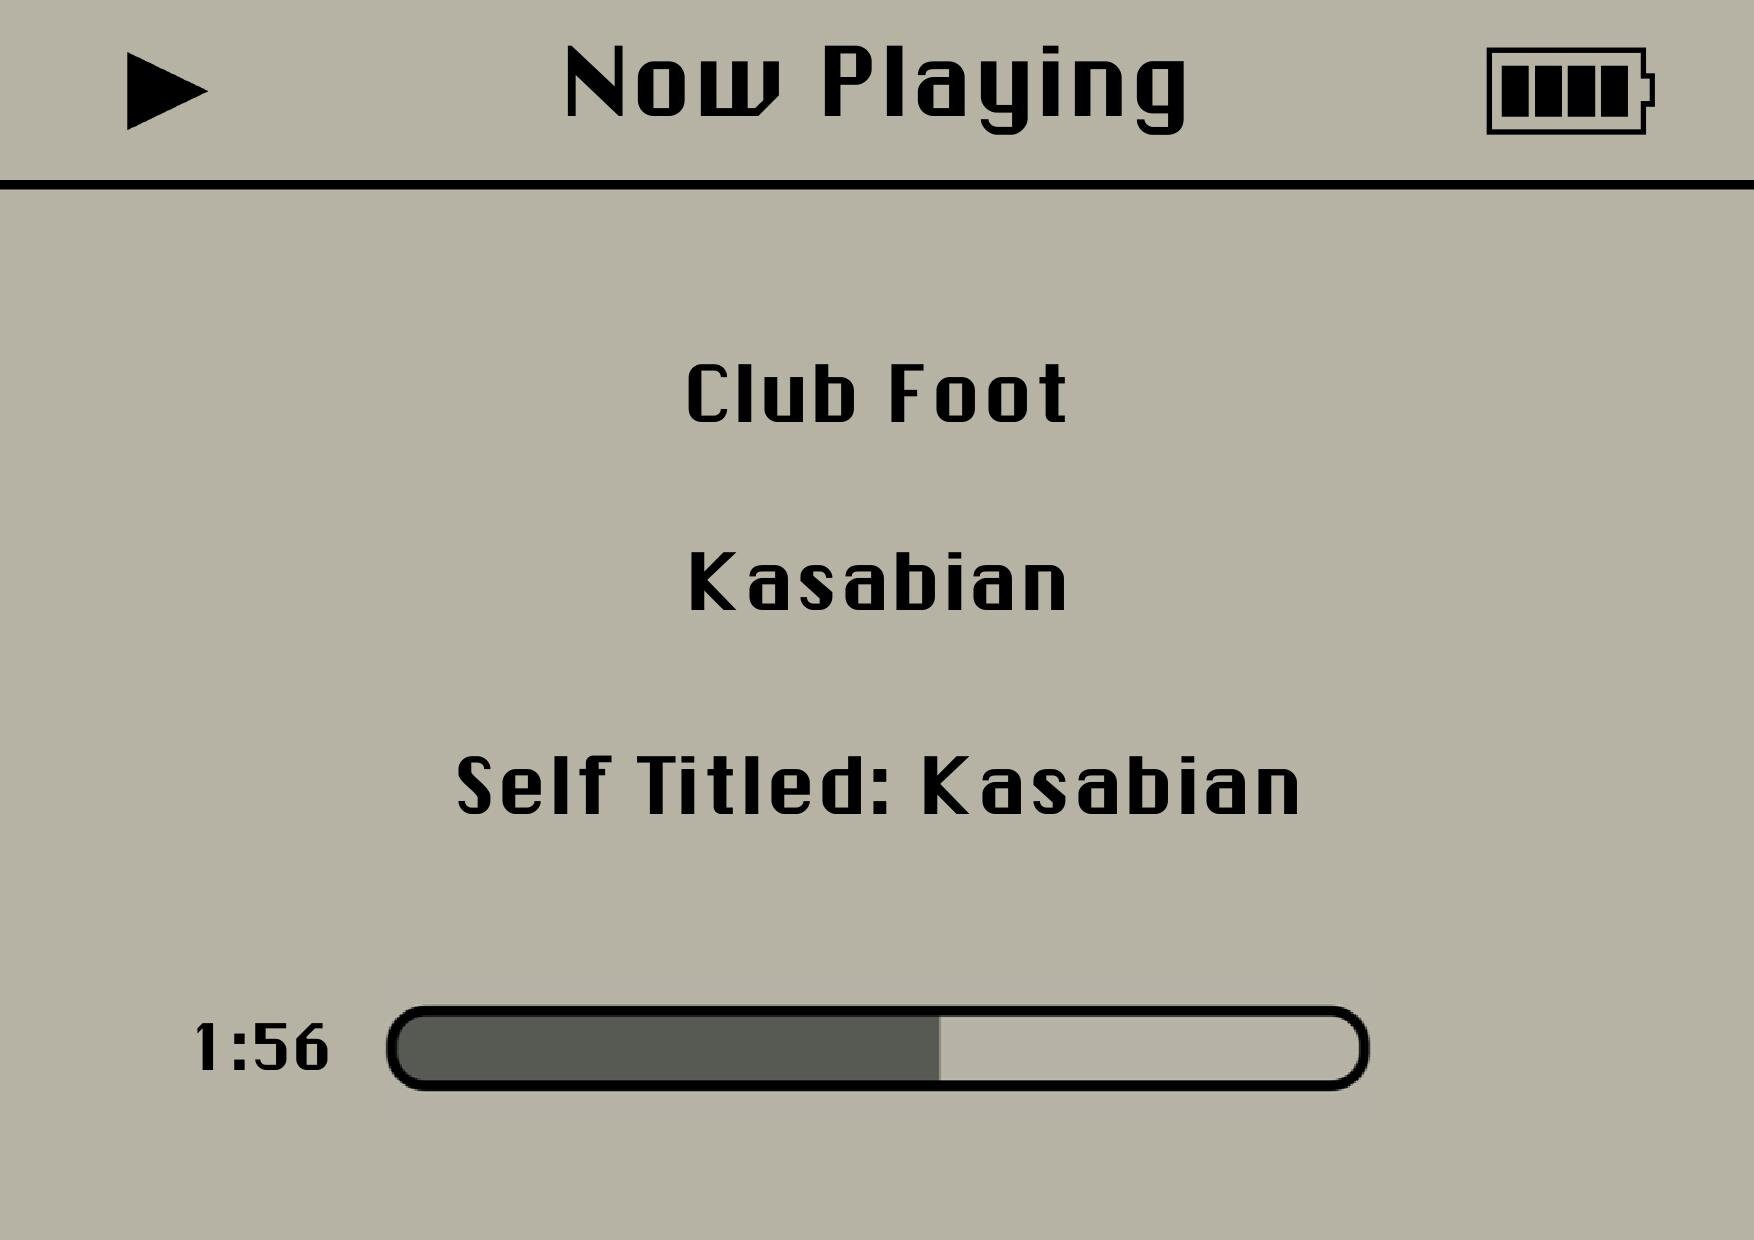 Kasabian Club Foot Retro Ipod/mp3 Player Art Poster A4 - Etsy